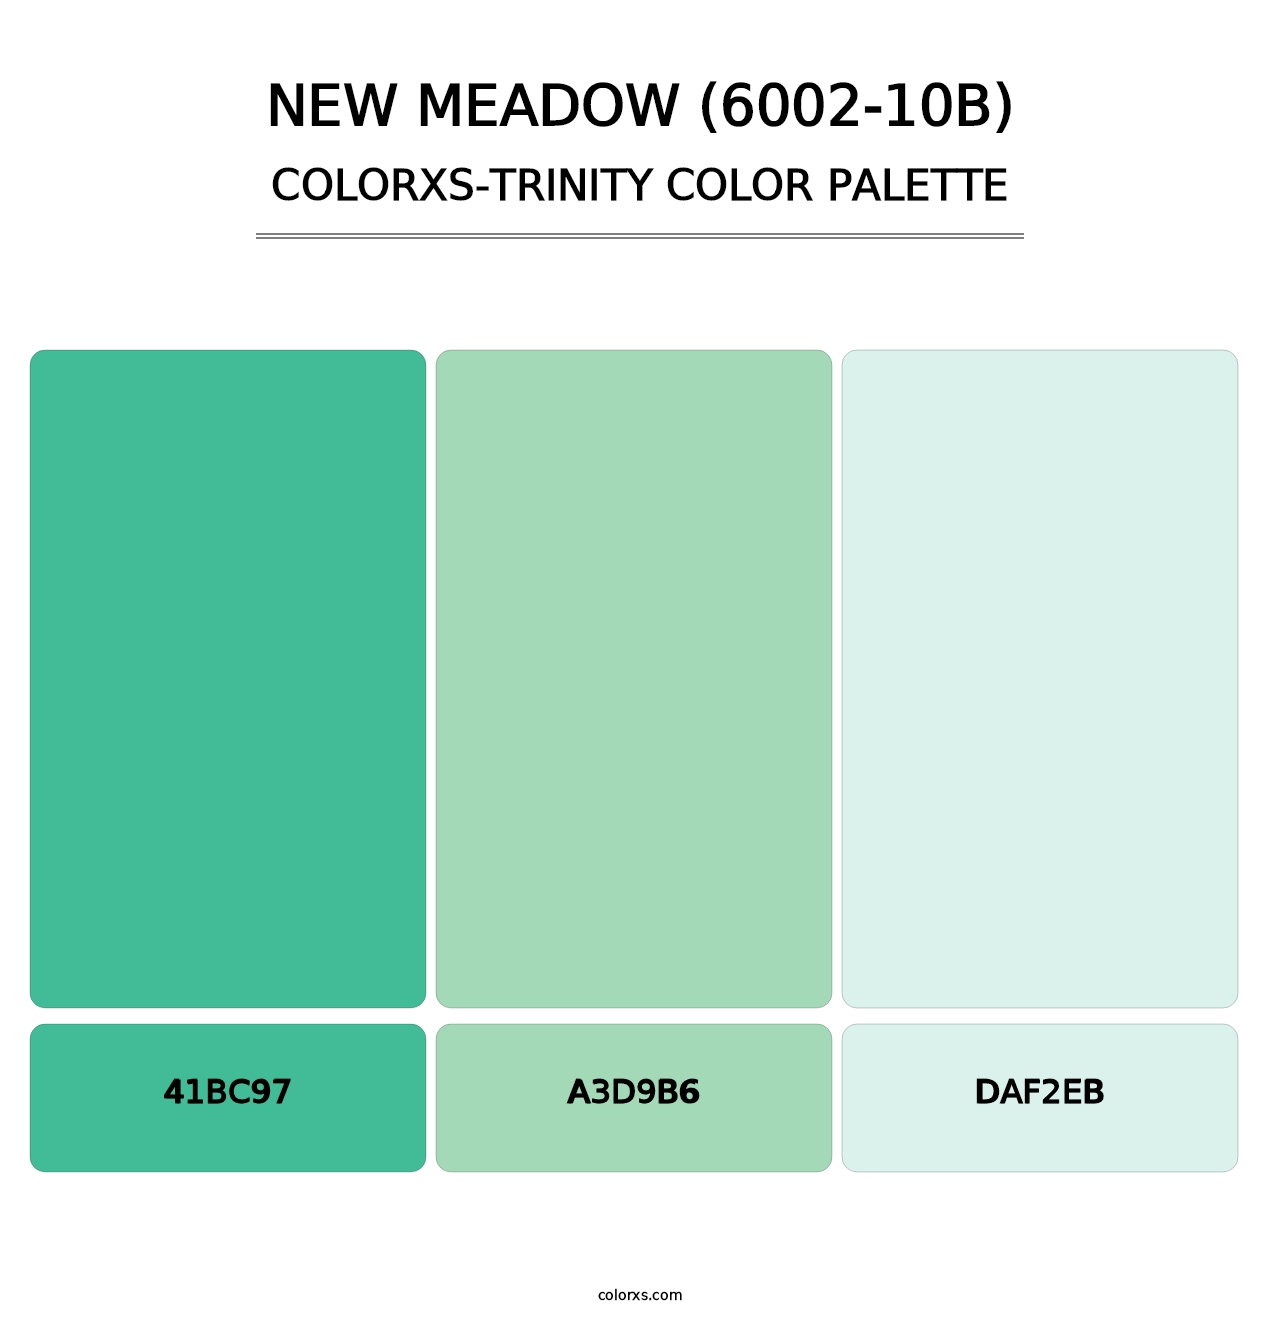 New Meadow (6002-10B) - Colorxs Trinity Palette